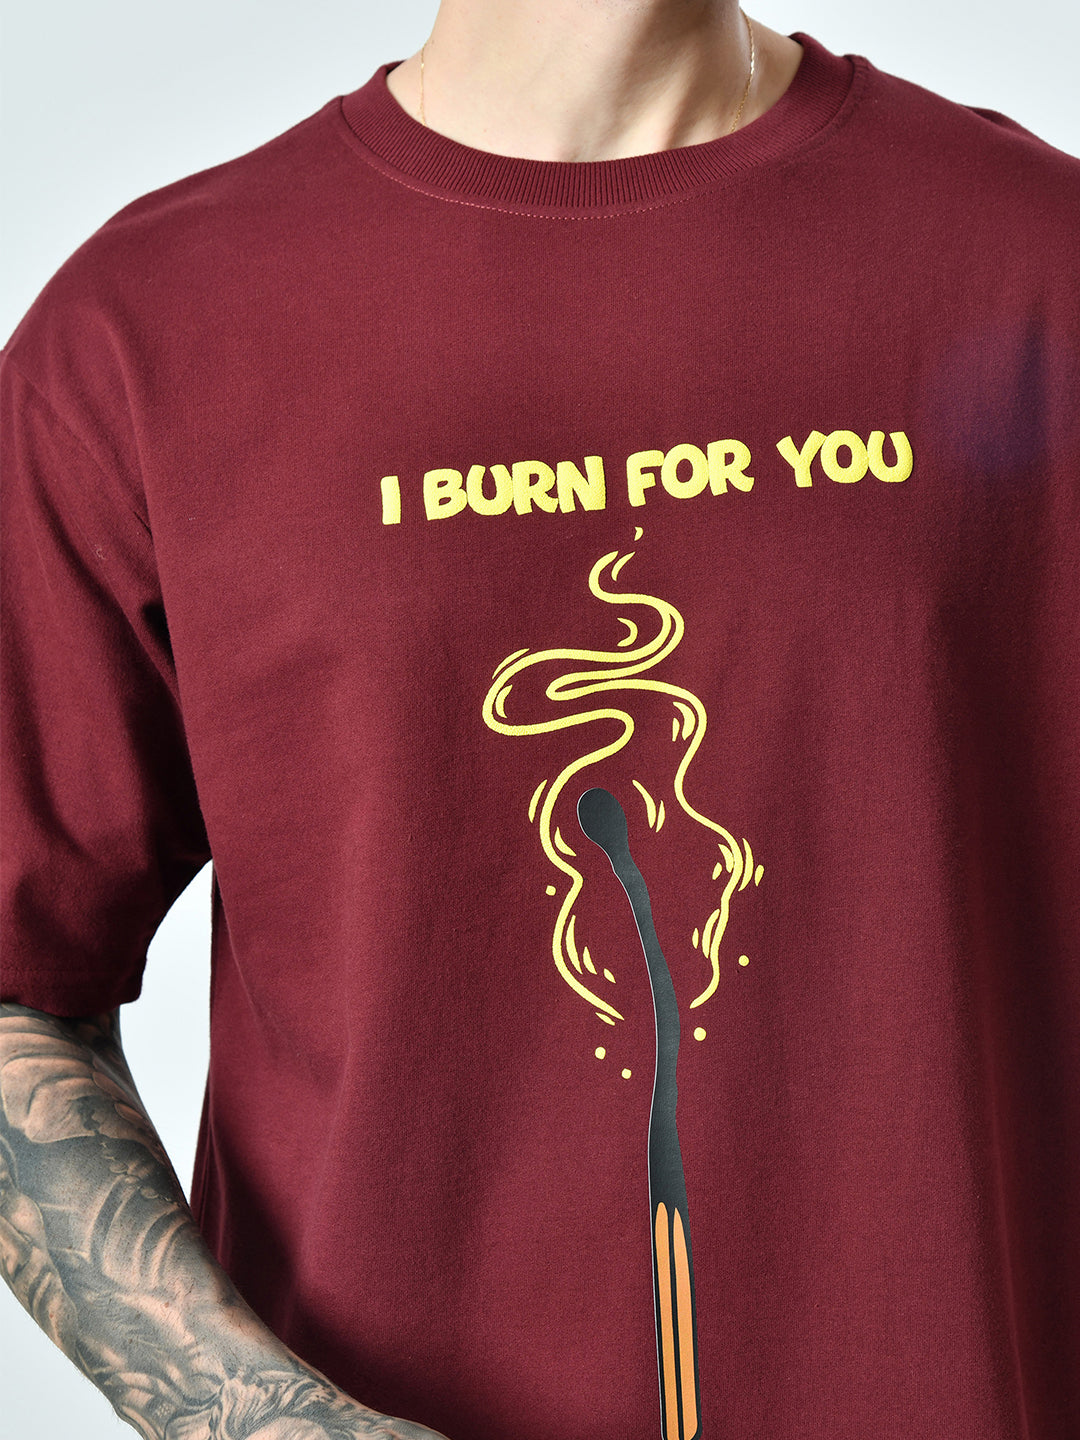 I Burn For You Puff Printed Burgundy Unisex Oversized T-Shirt